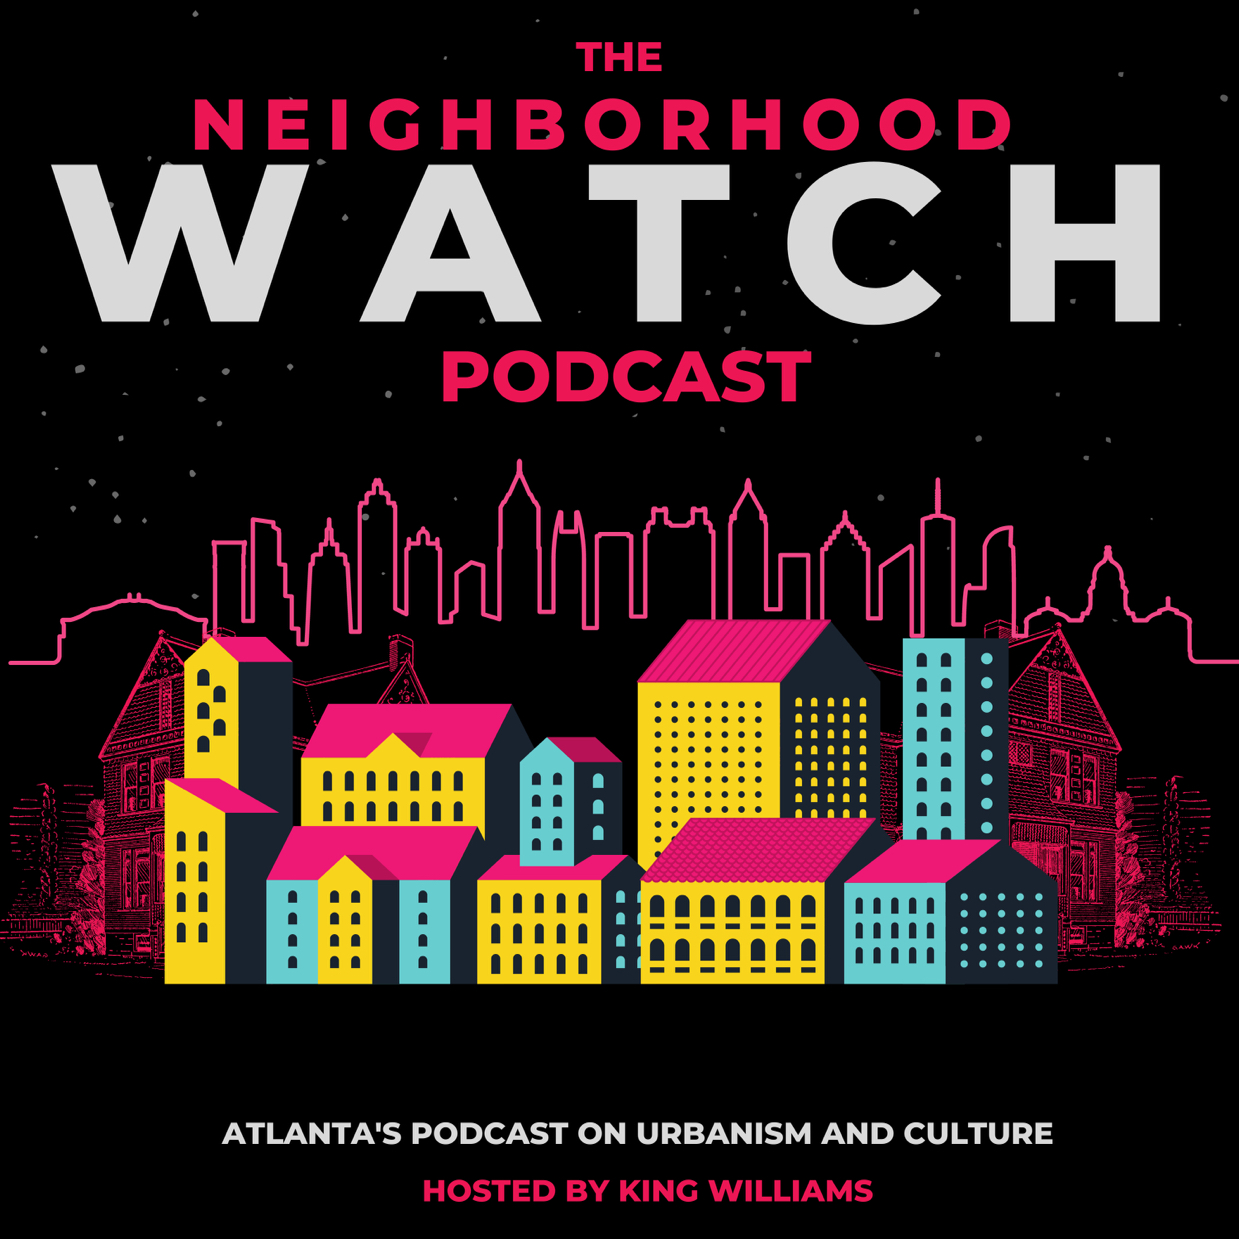 The Neighborhood Watch Podcast